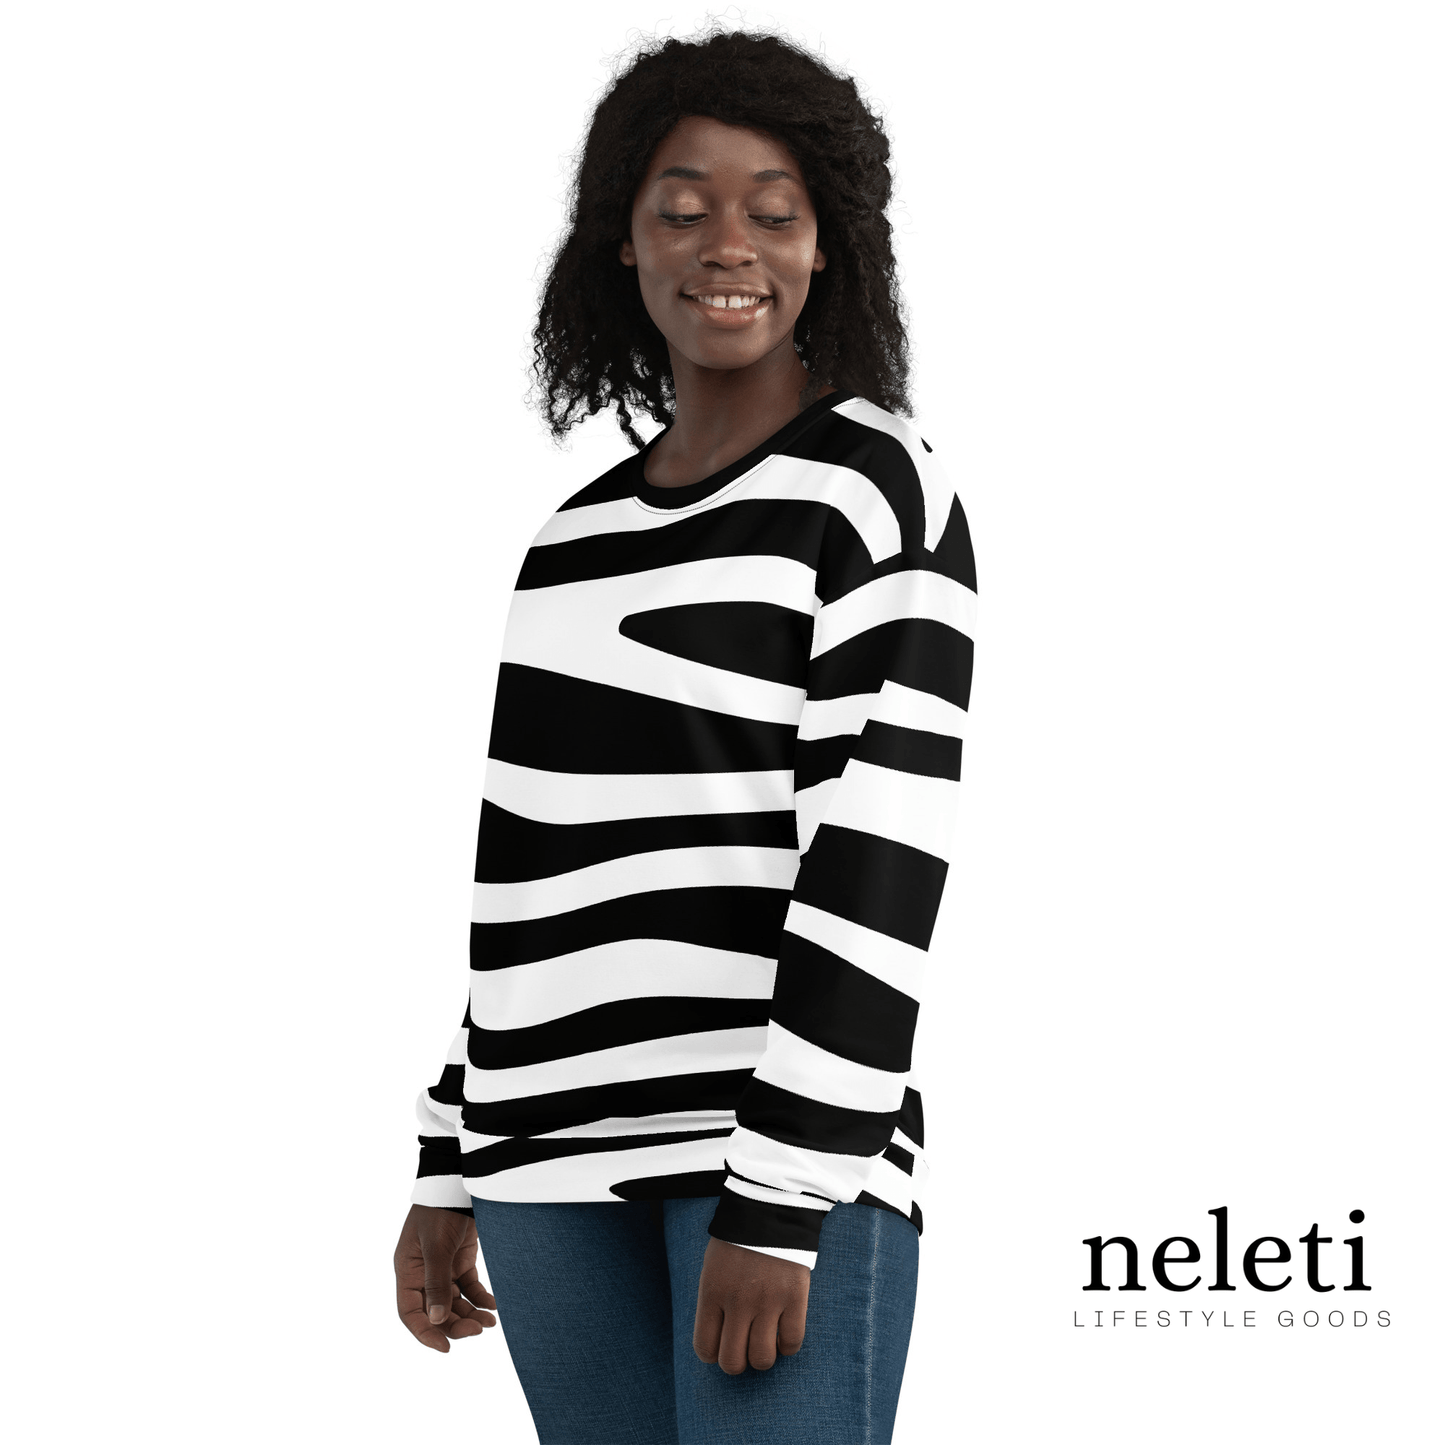 neleti.com-black-and-white-wavy-stripped-sweatshirt-for-women